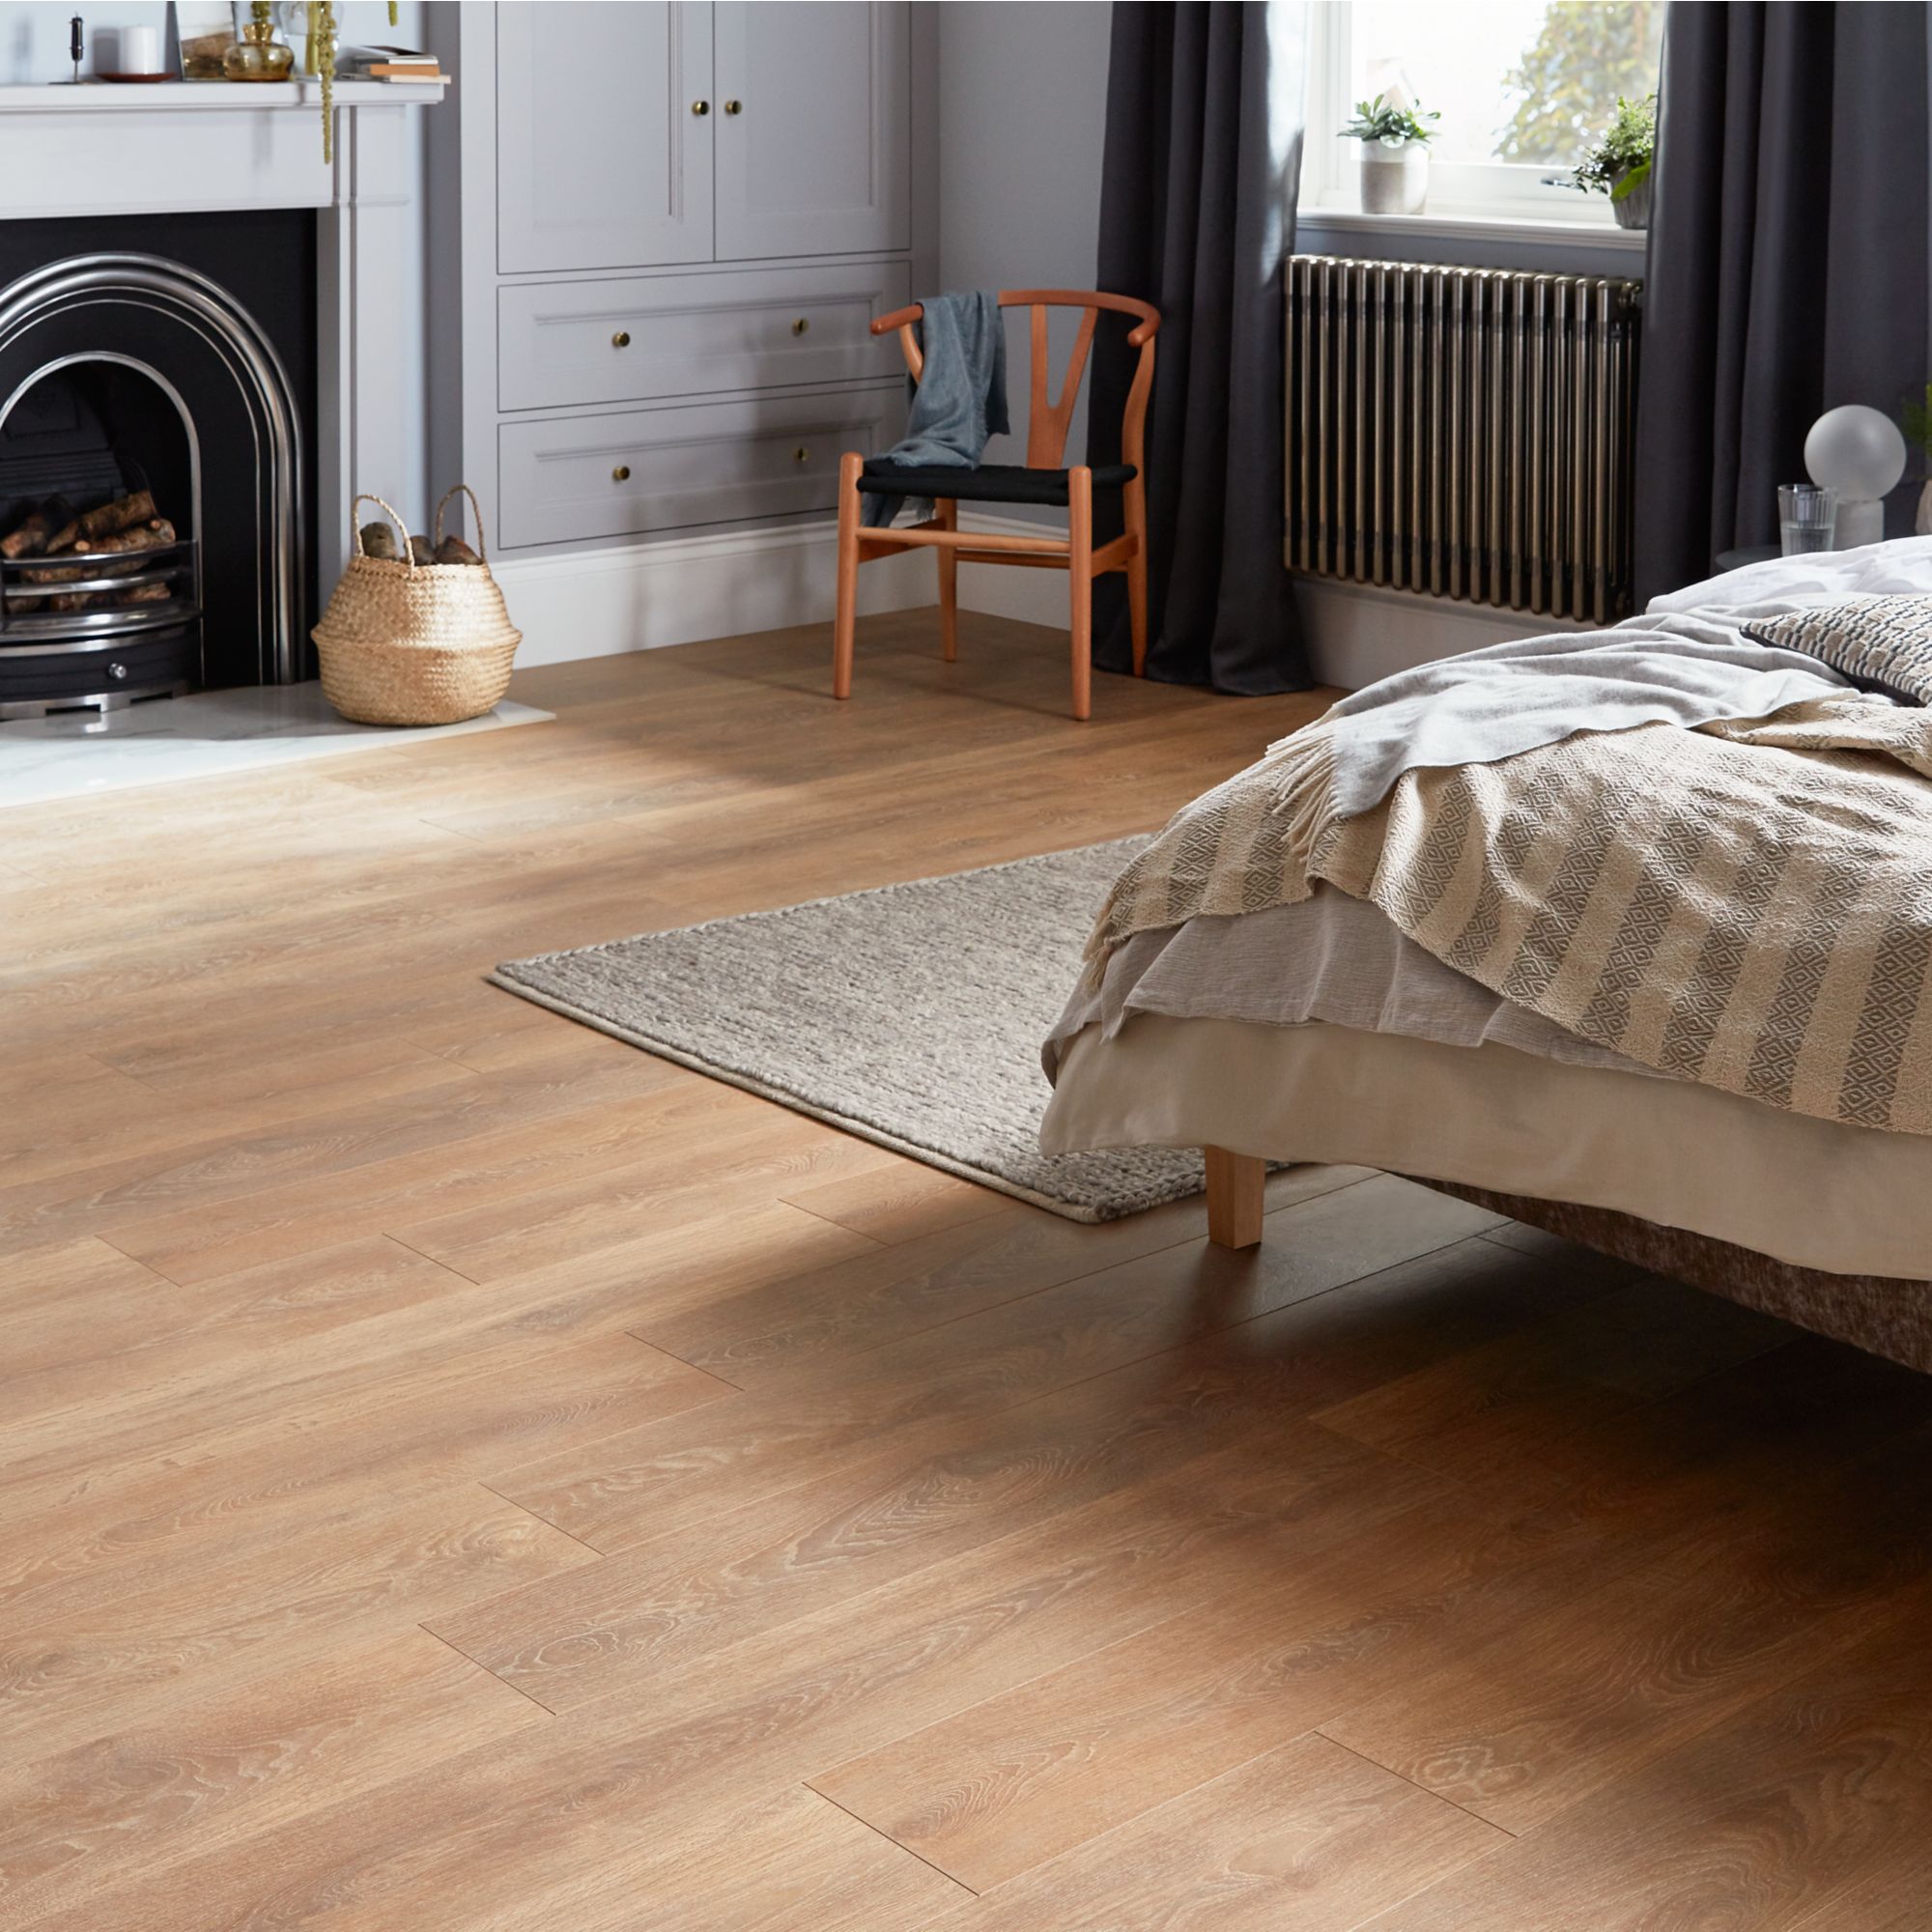 Goodhome Mossley Natural Oak Effect Laminate Flooring 1 73m Pack